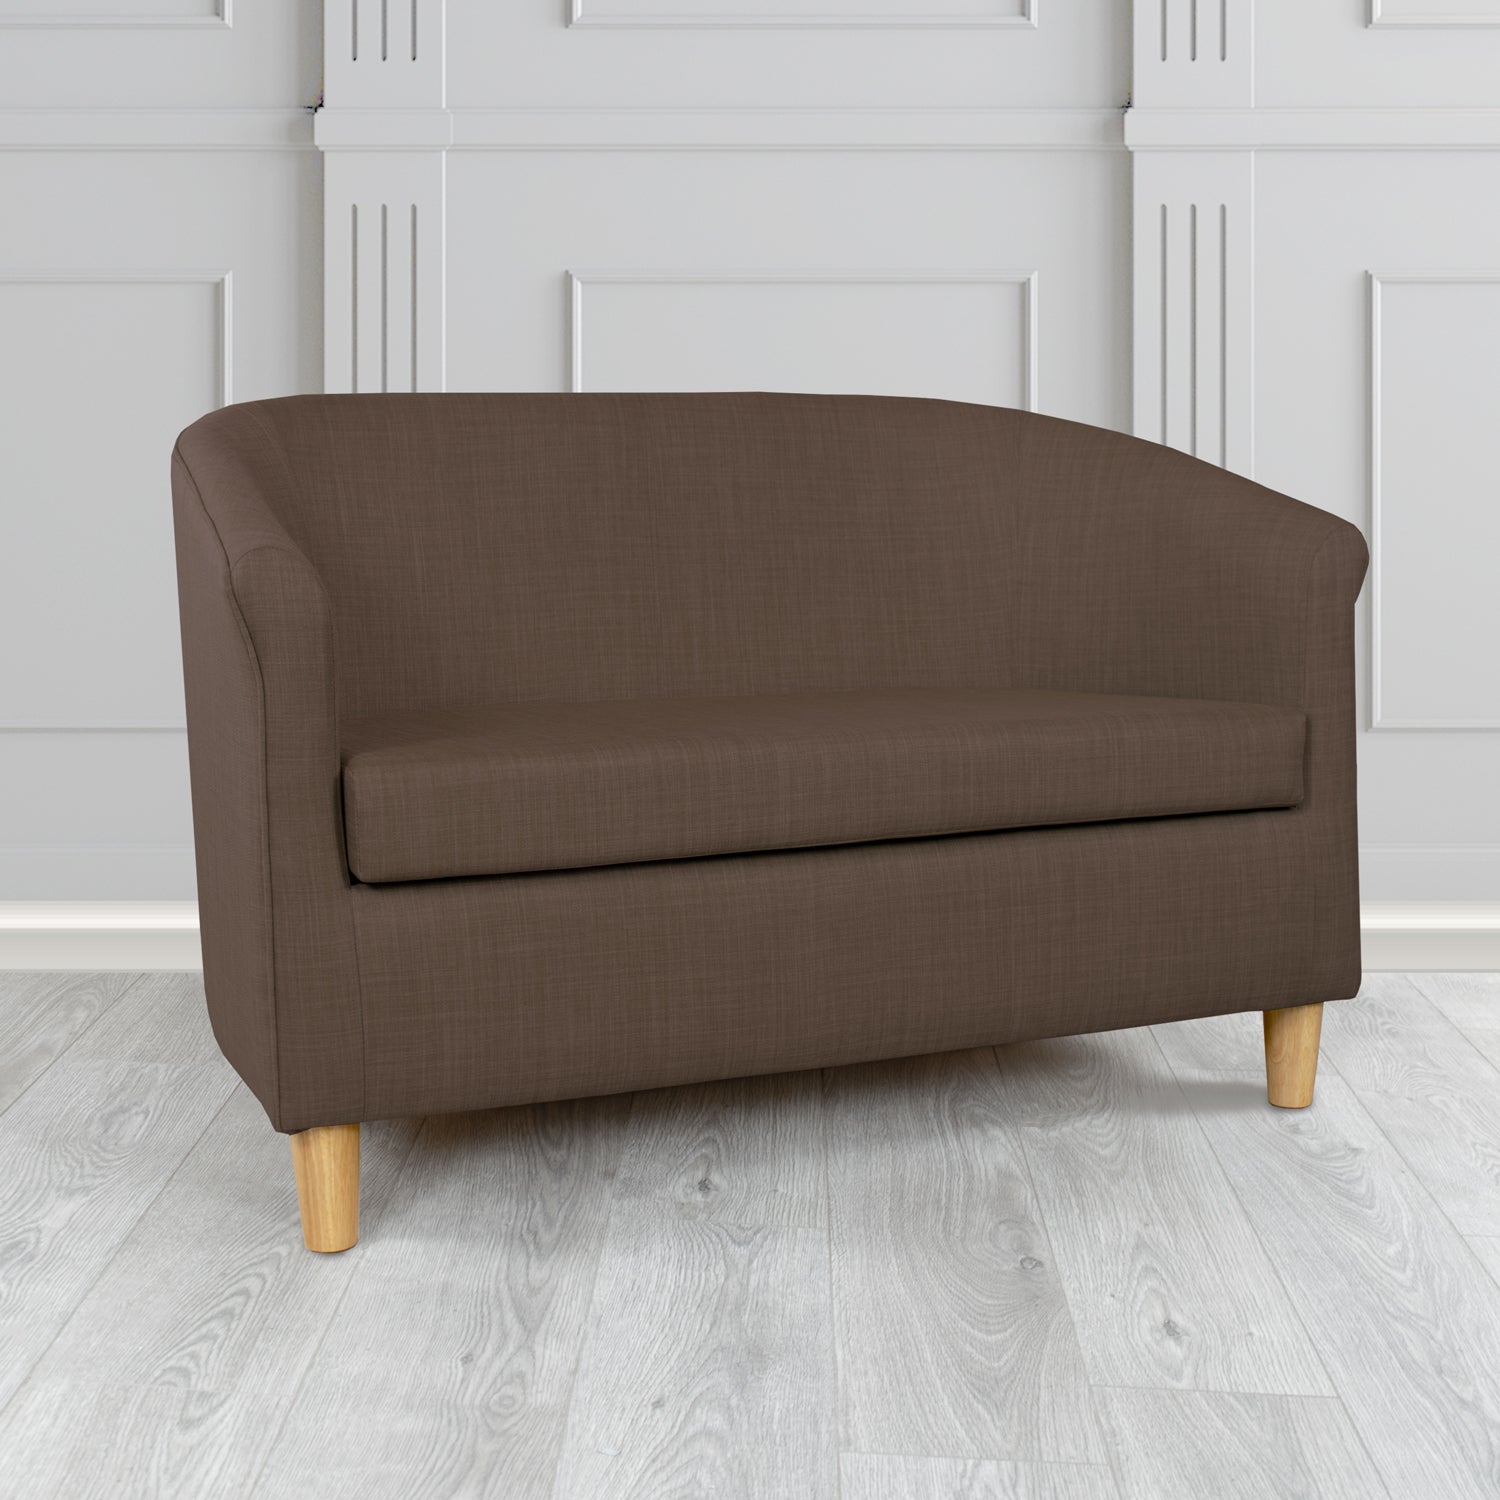 Tuscany Charles Sandalwood Plain Linen Fabric 2 Seater Tub Sofa - The Tub Chair Shop